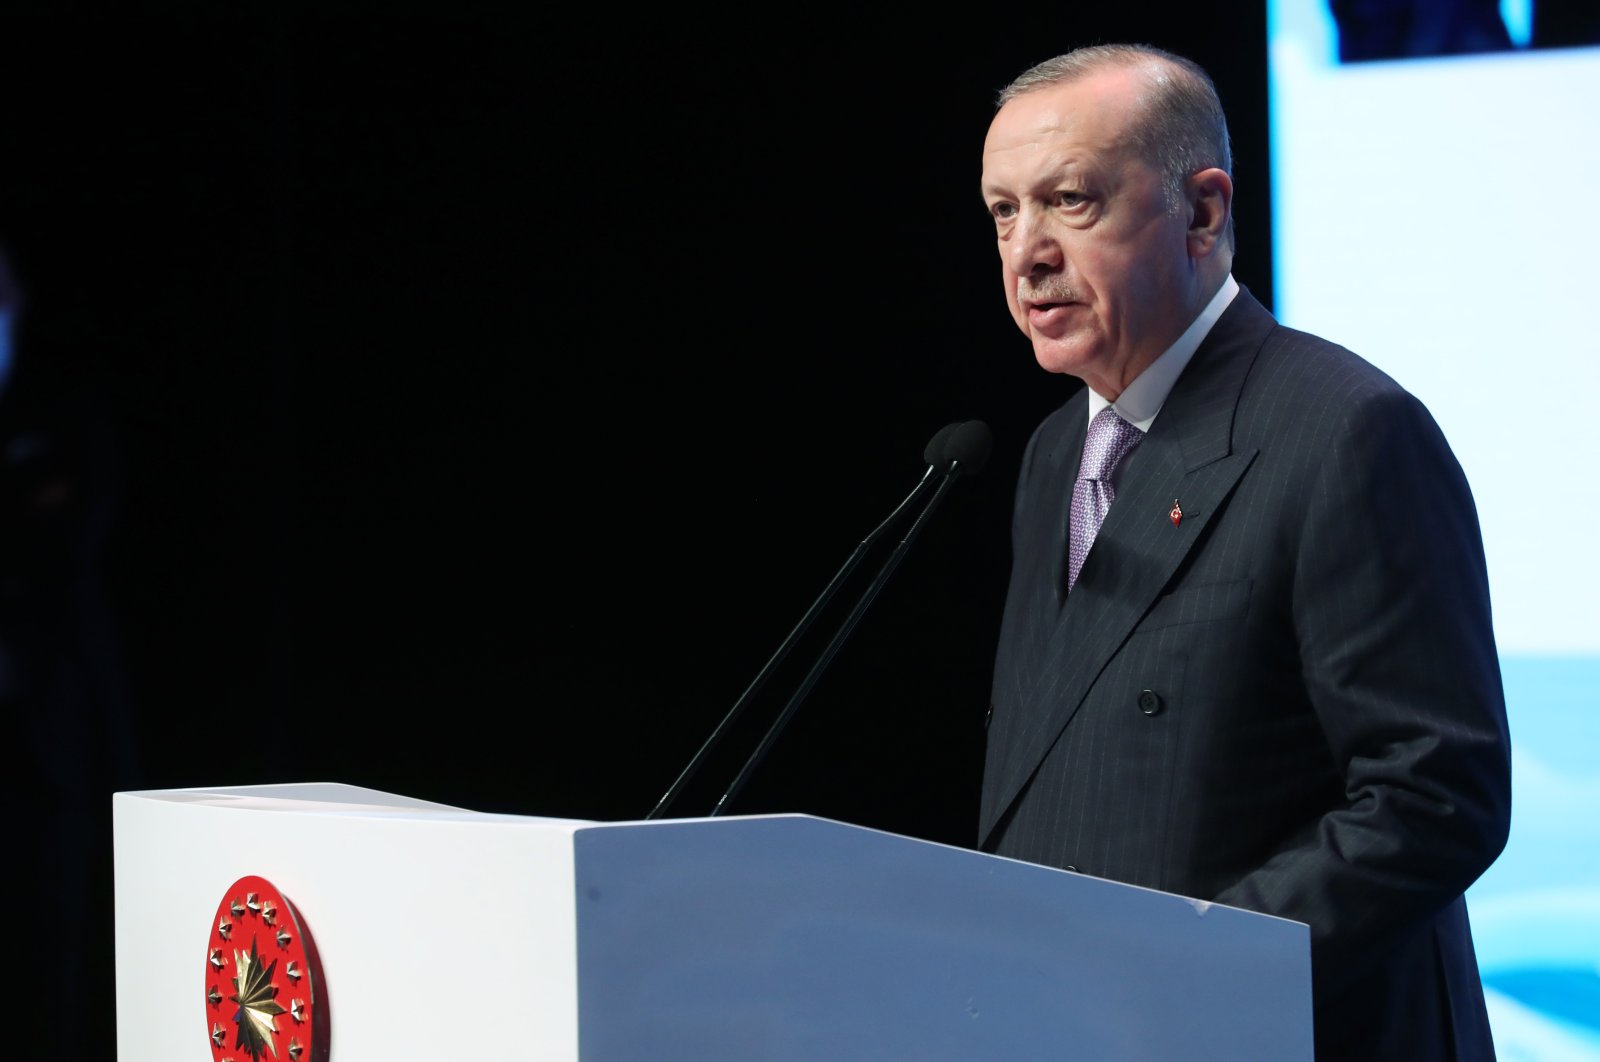 Perubahan arus sementara, fluktuasi nilai tukar terkendali: Erdoğan